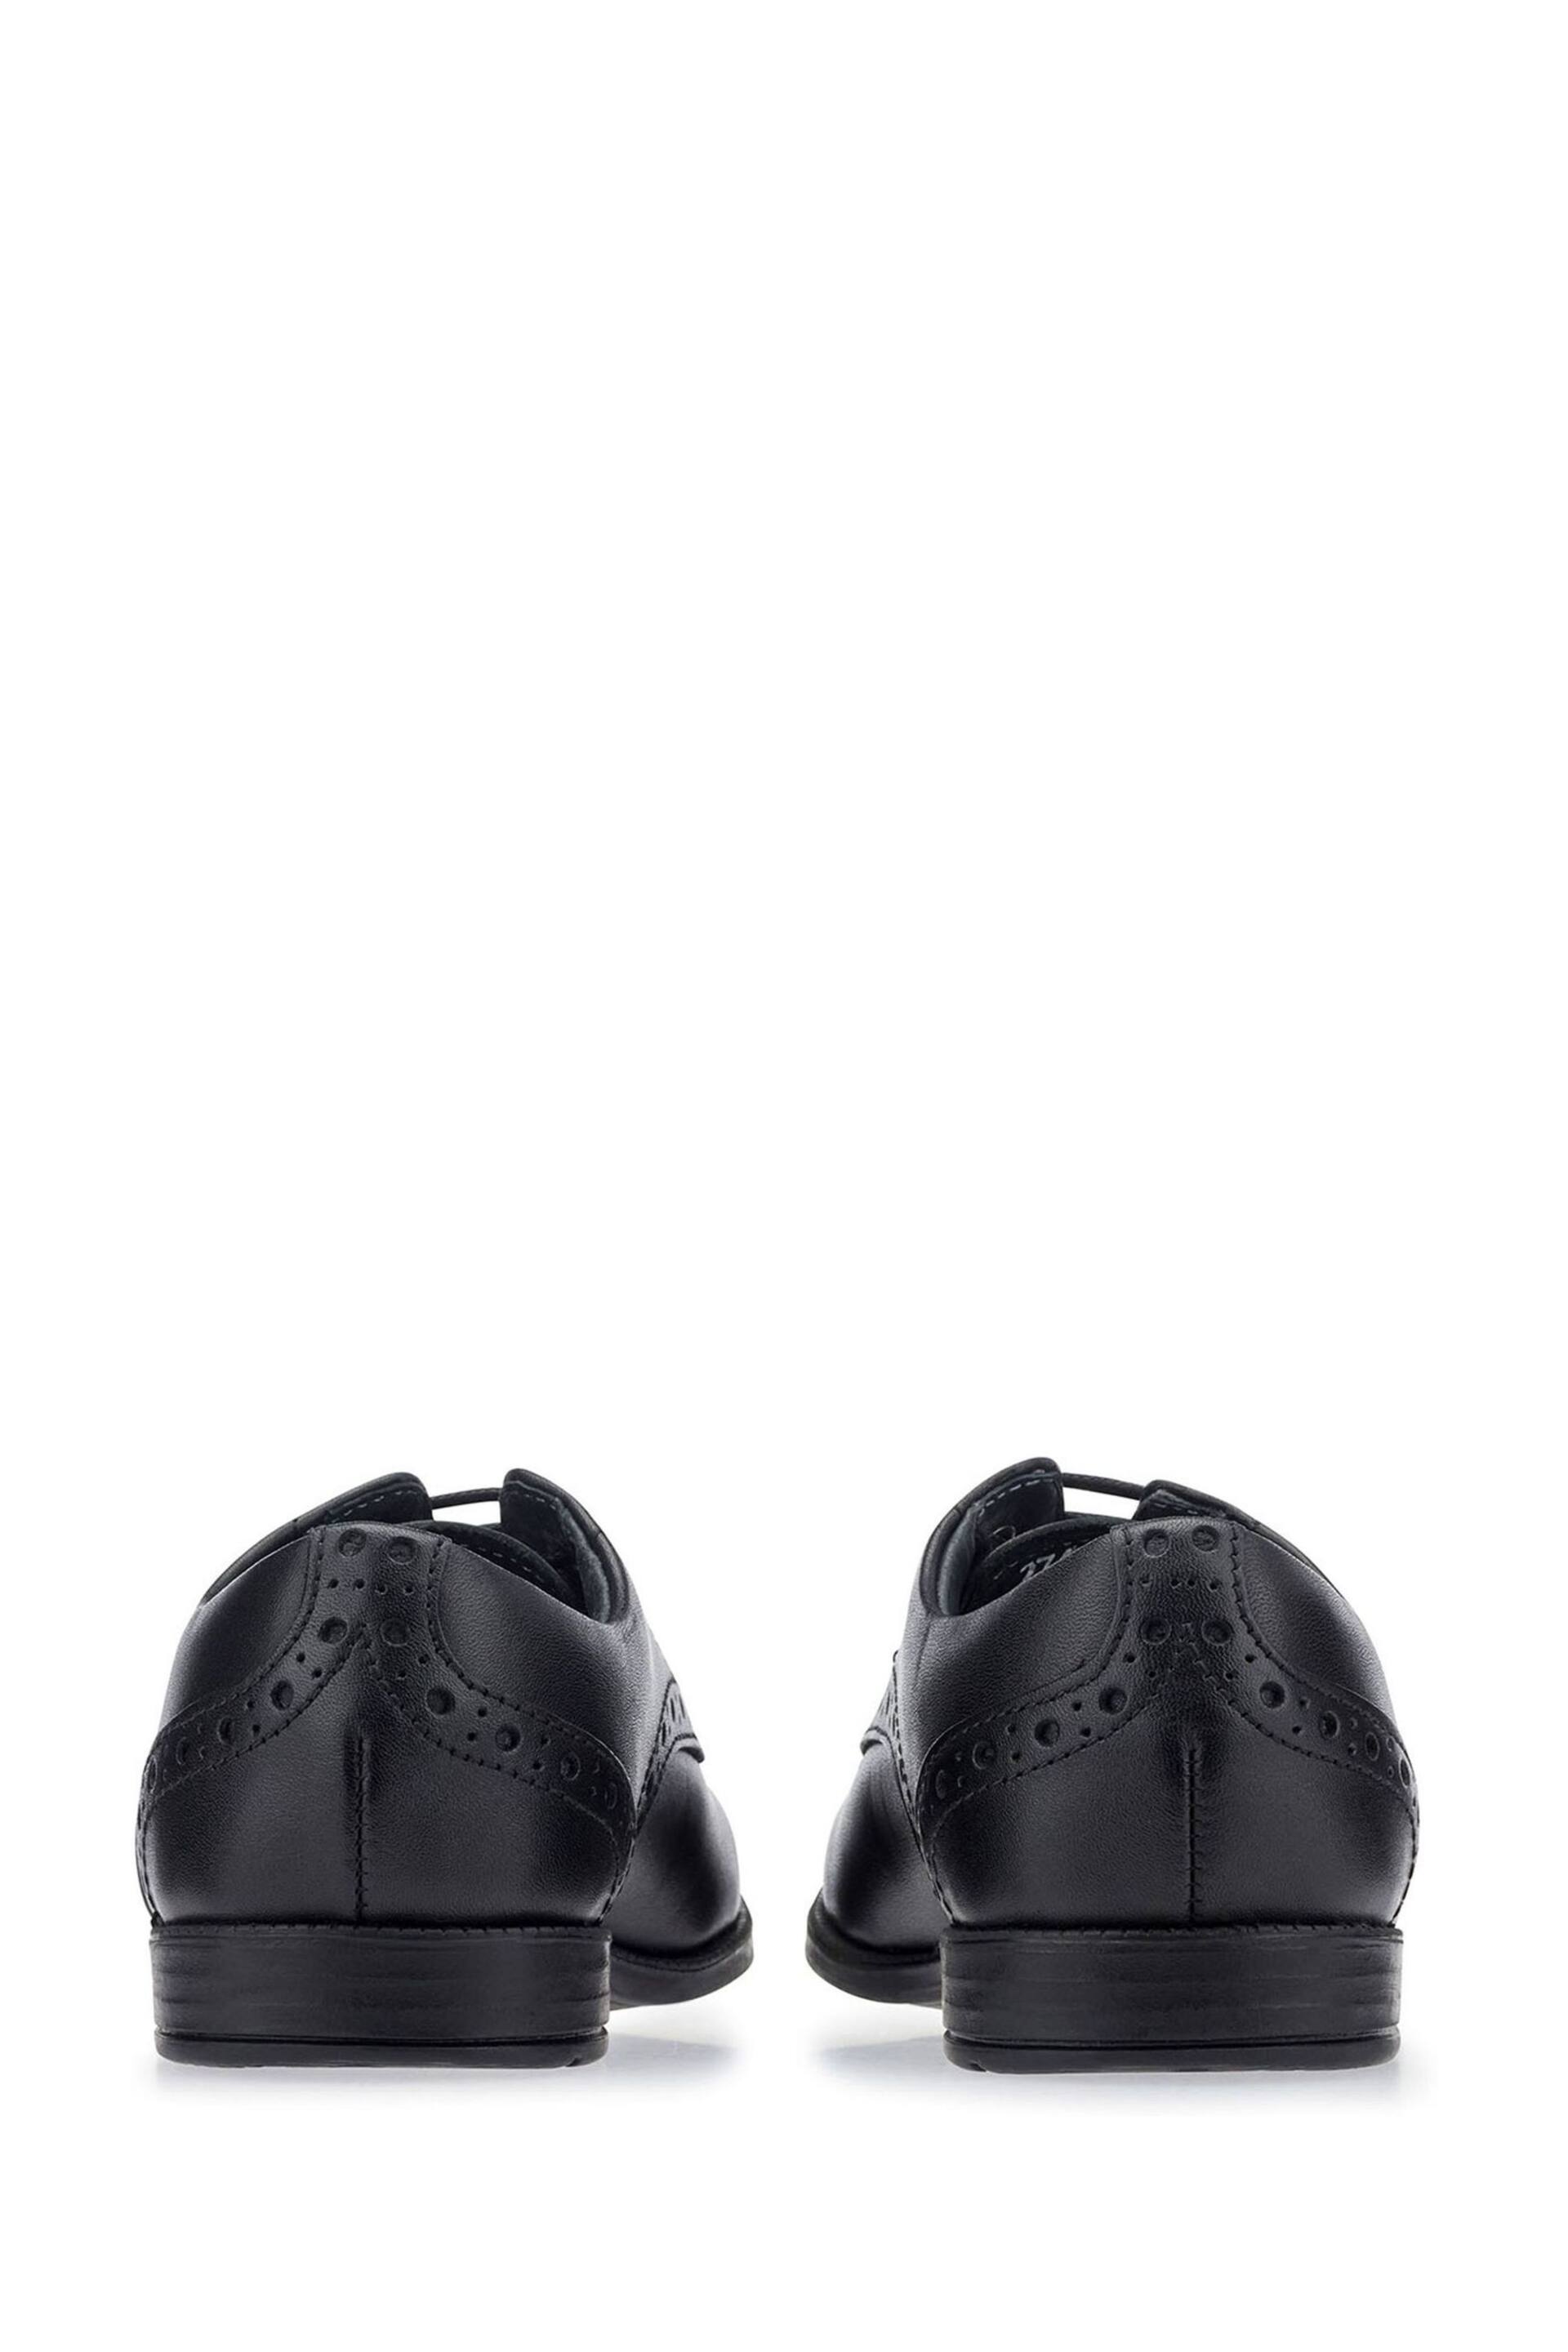 Start-Rite Brogue Snr Black Vegan Smart School Shoes F Fit - Image 3 of 6